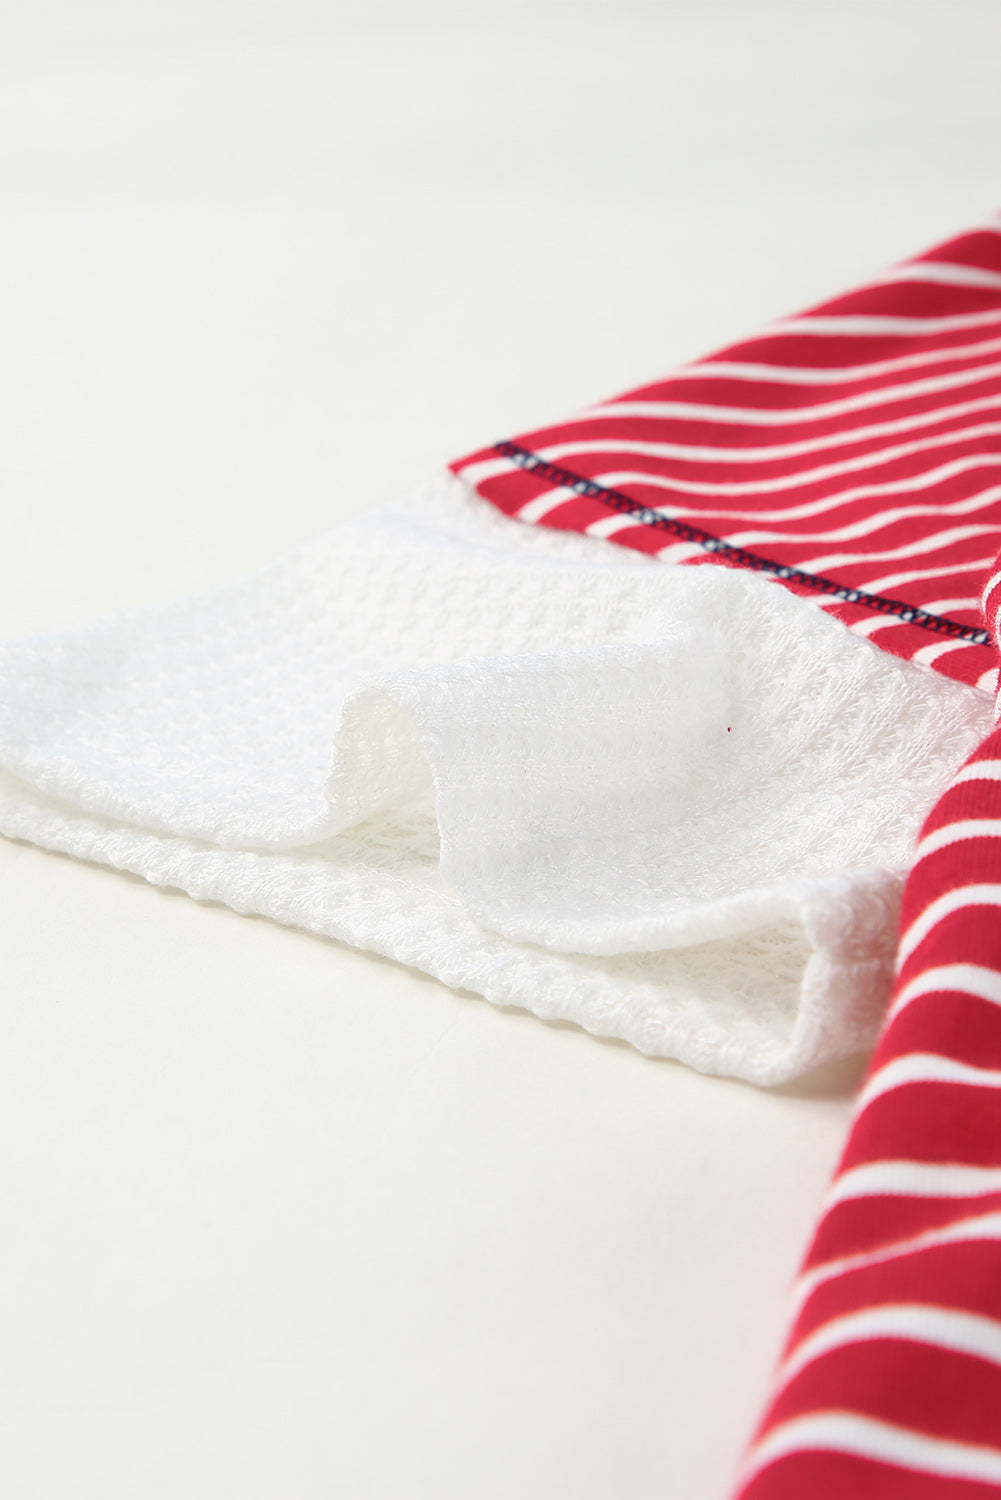 Blue Stripes Stars Print Knit Short Sleeves Top